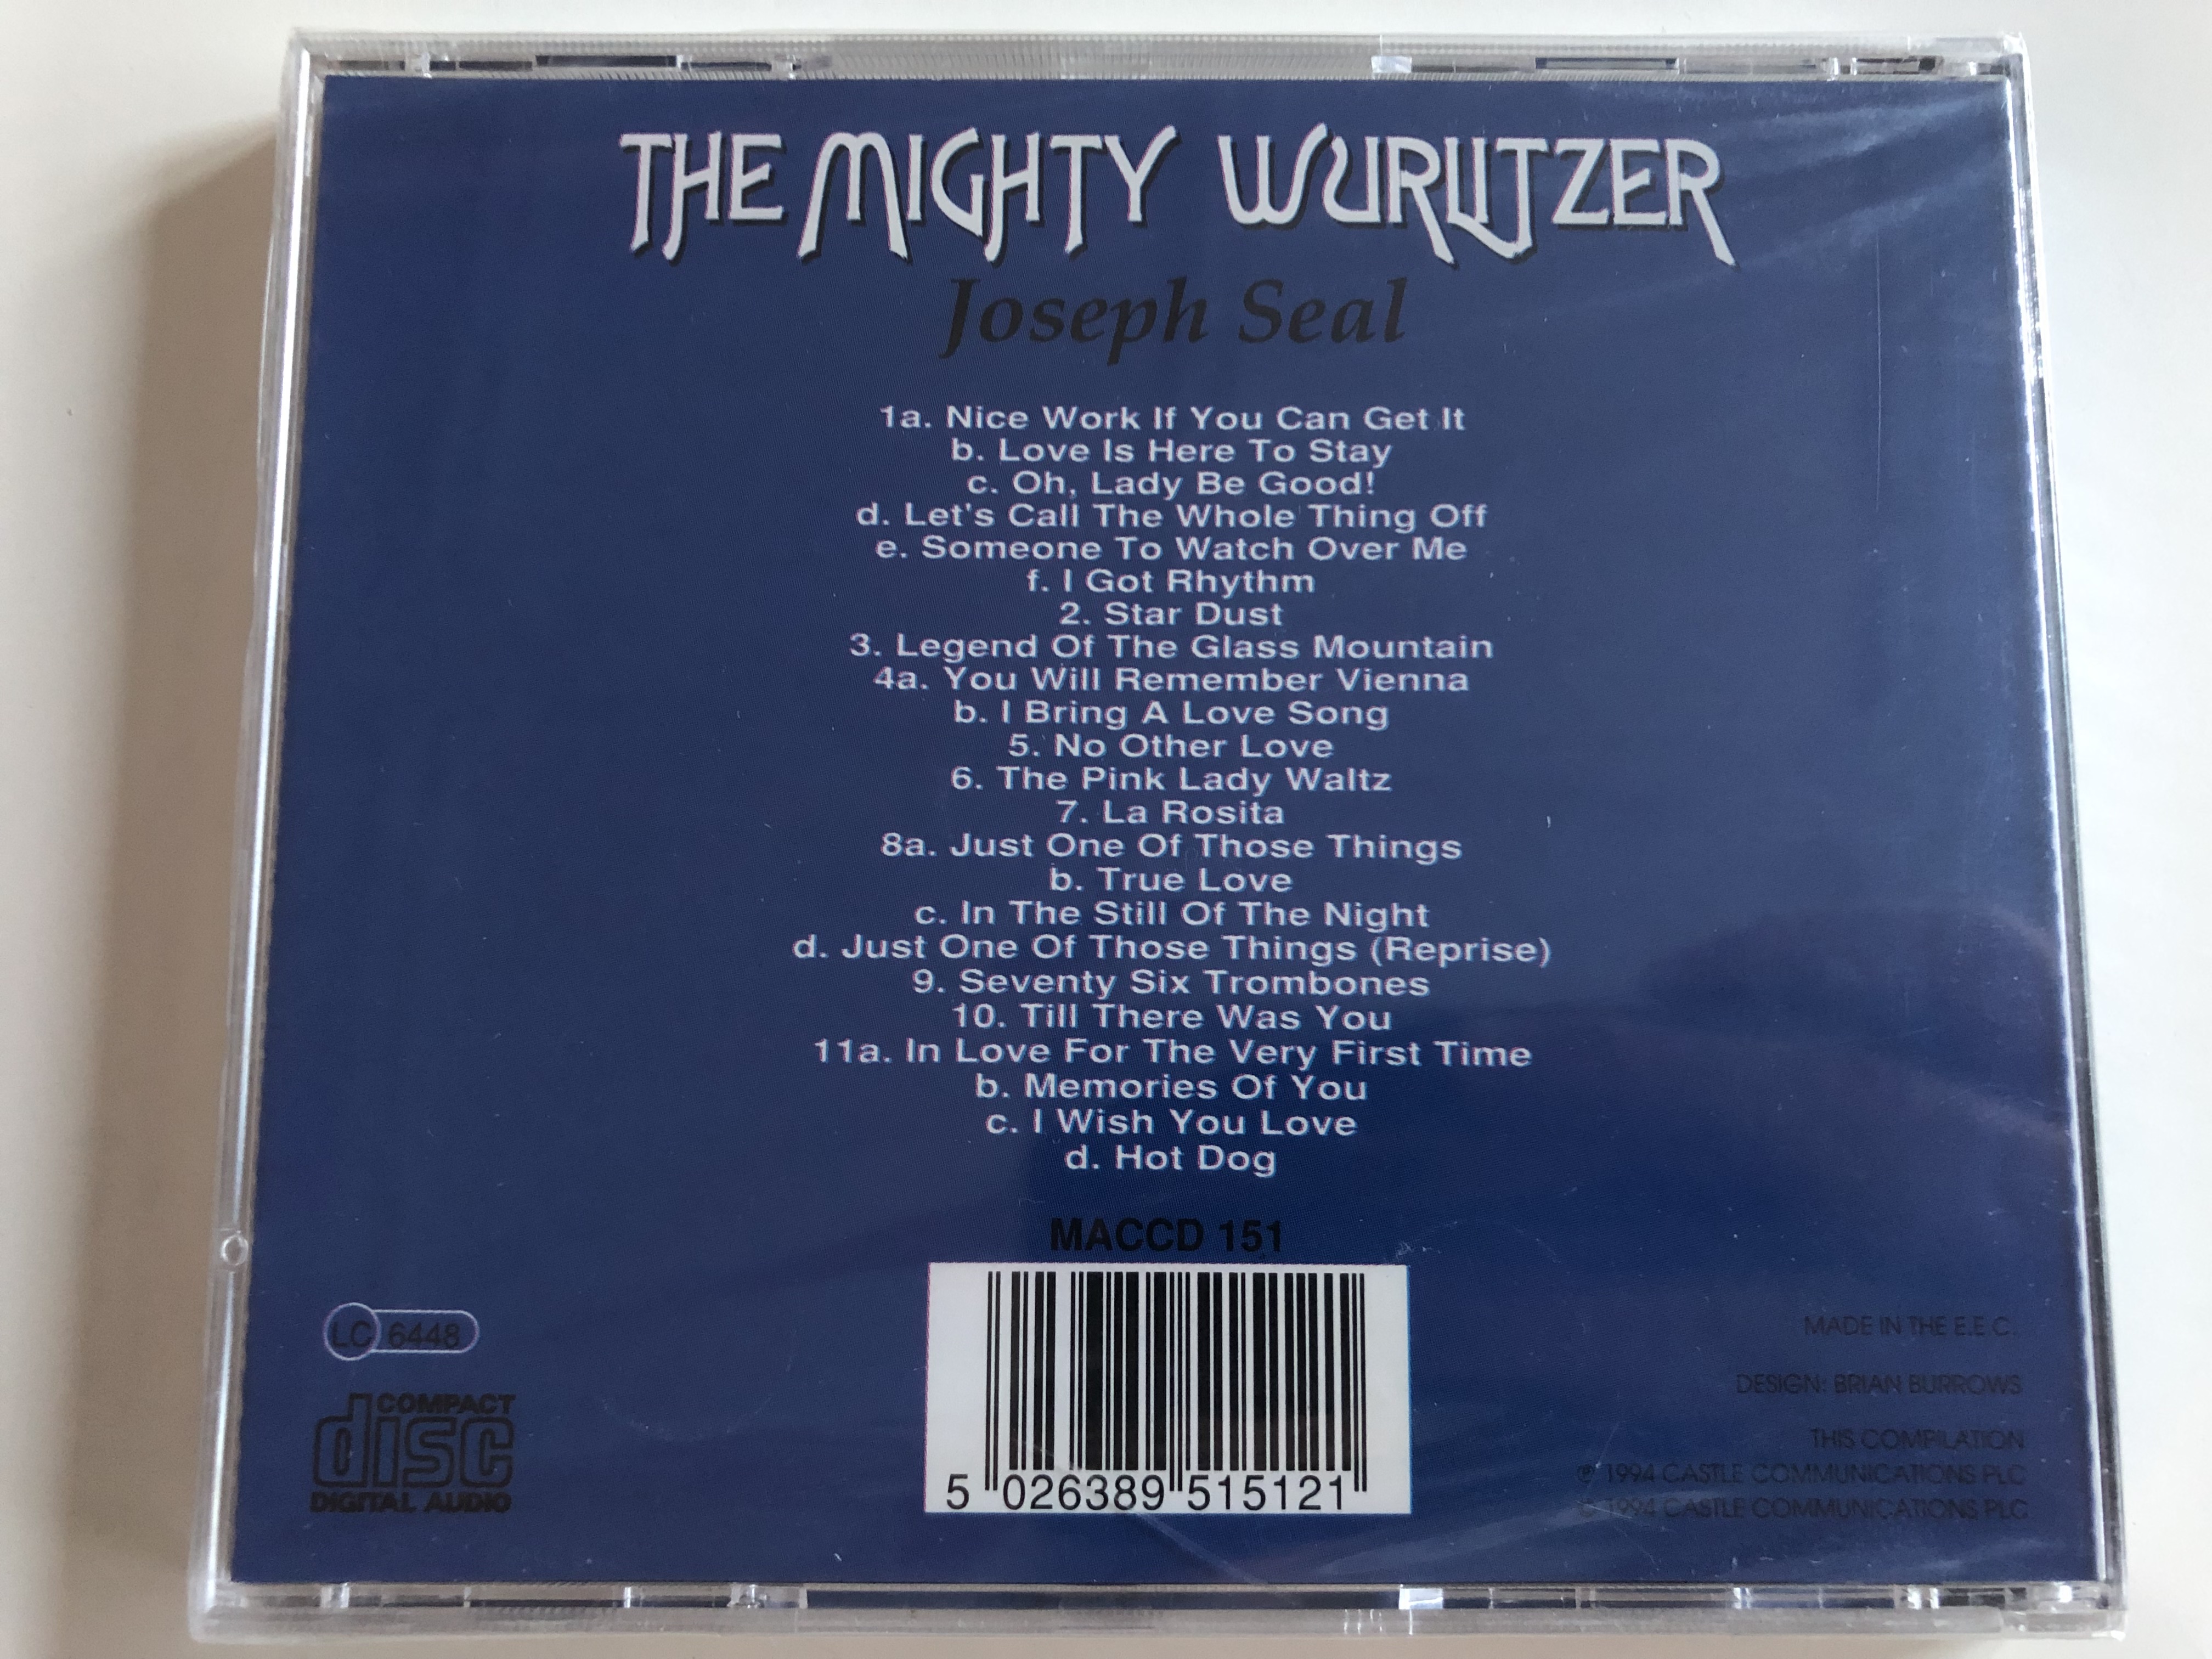 joseph-seal-performs-the-mighty-wurlitzer-audio-cd-1994-i-got-rhythm-in-the-still-of-the-night-star-dust-castle-communications-maccd-151-2-.jpg